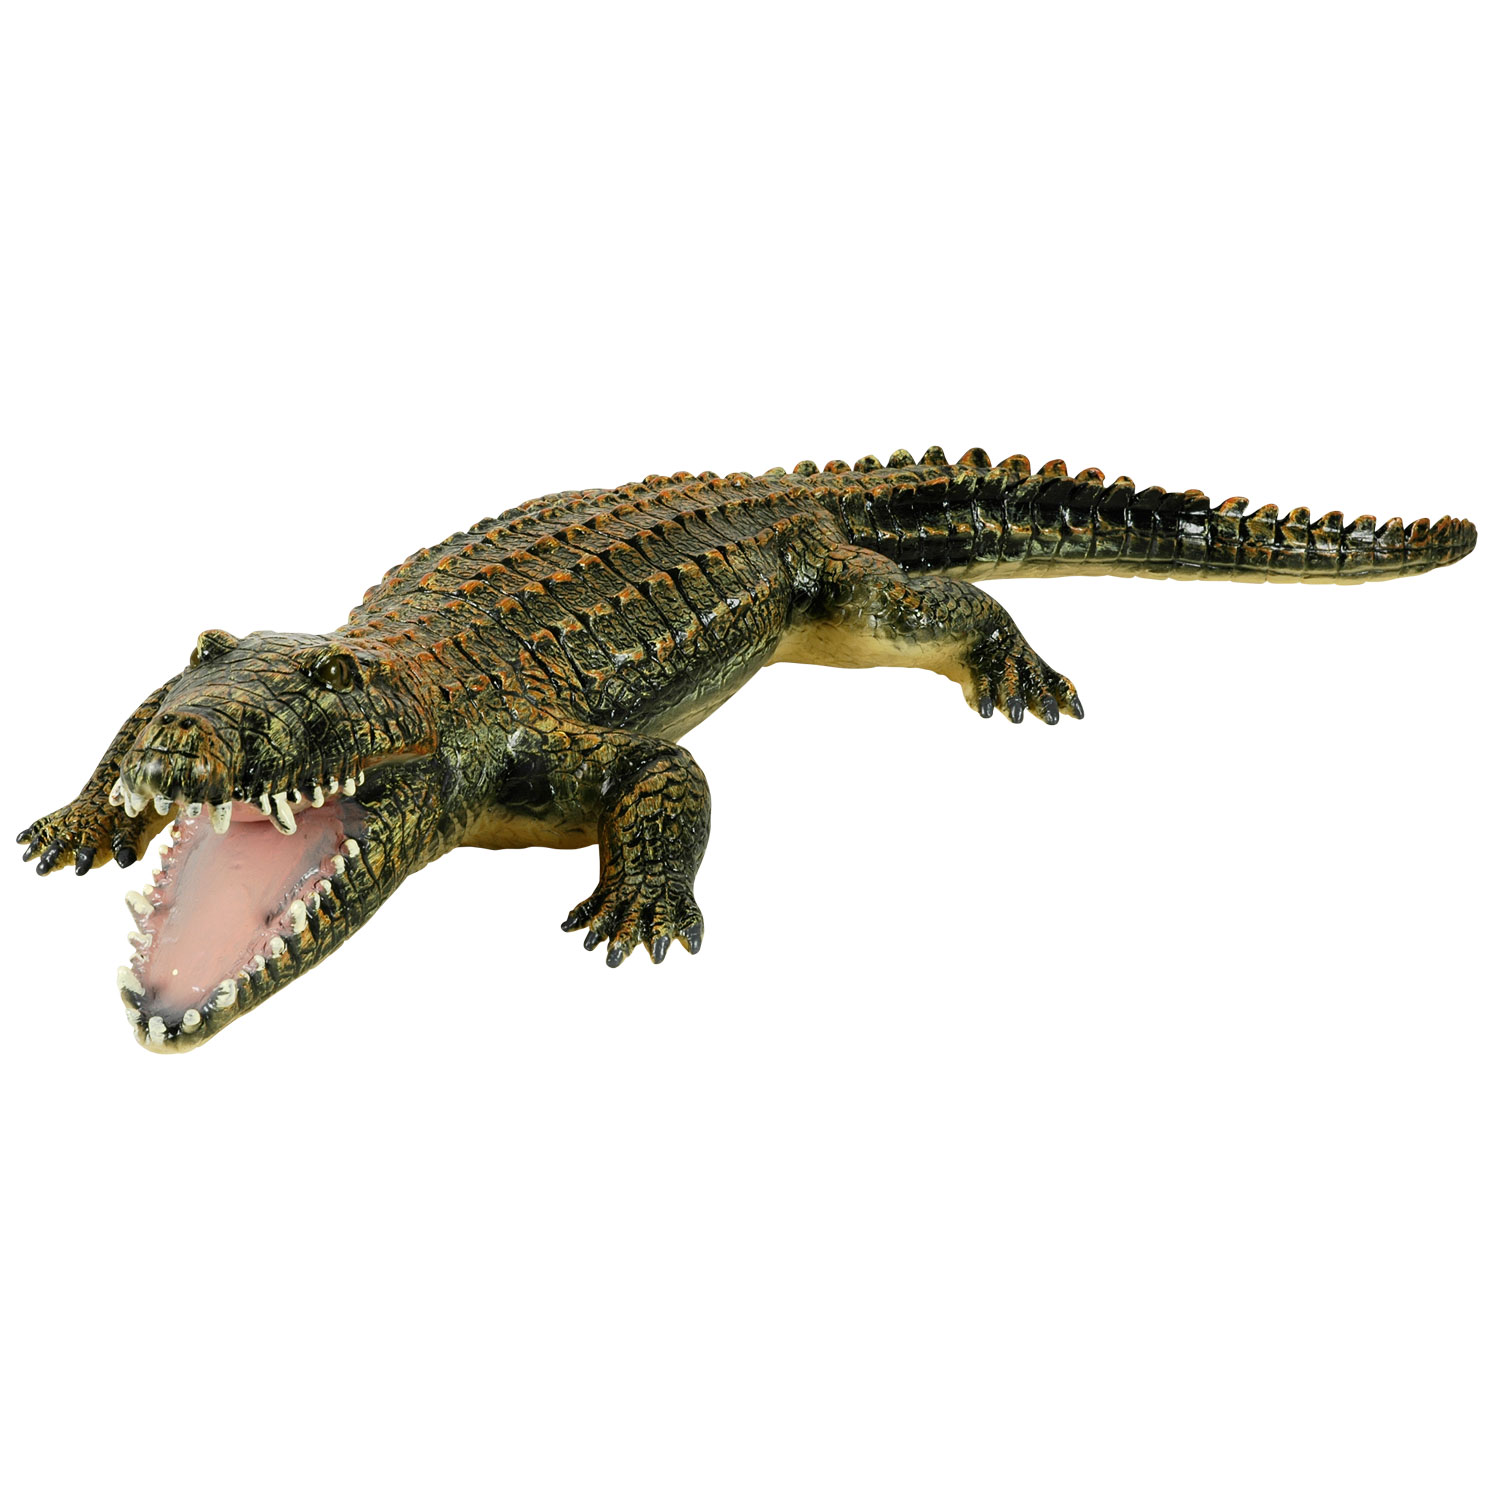 Krokodil Soft Touch, 60cm